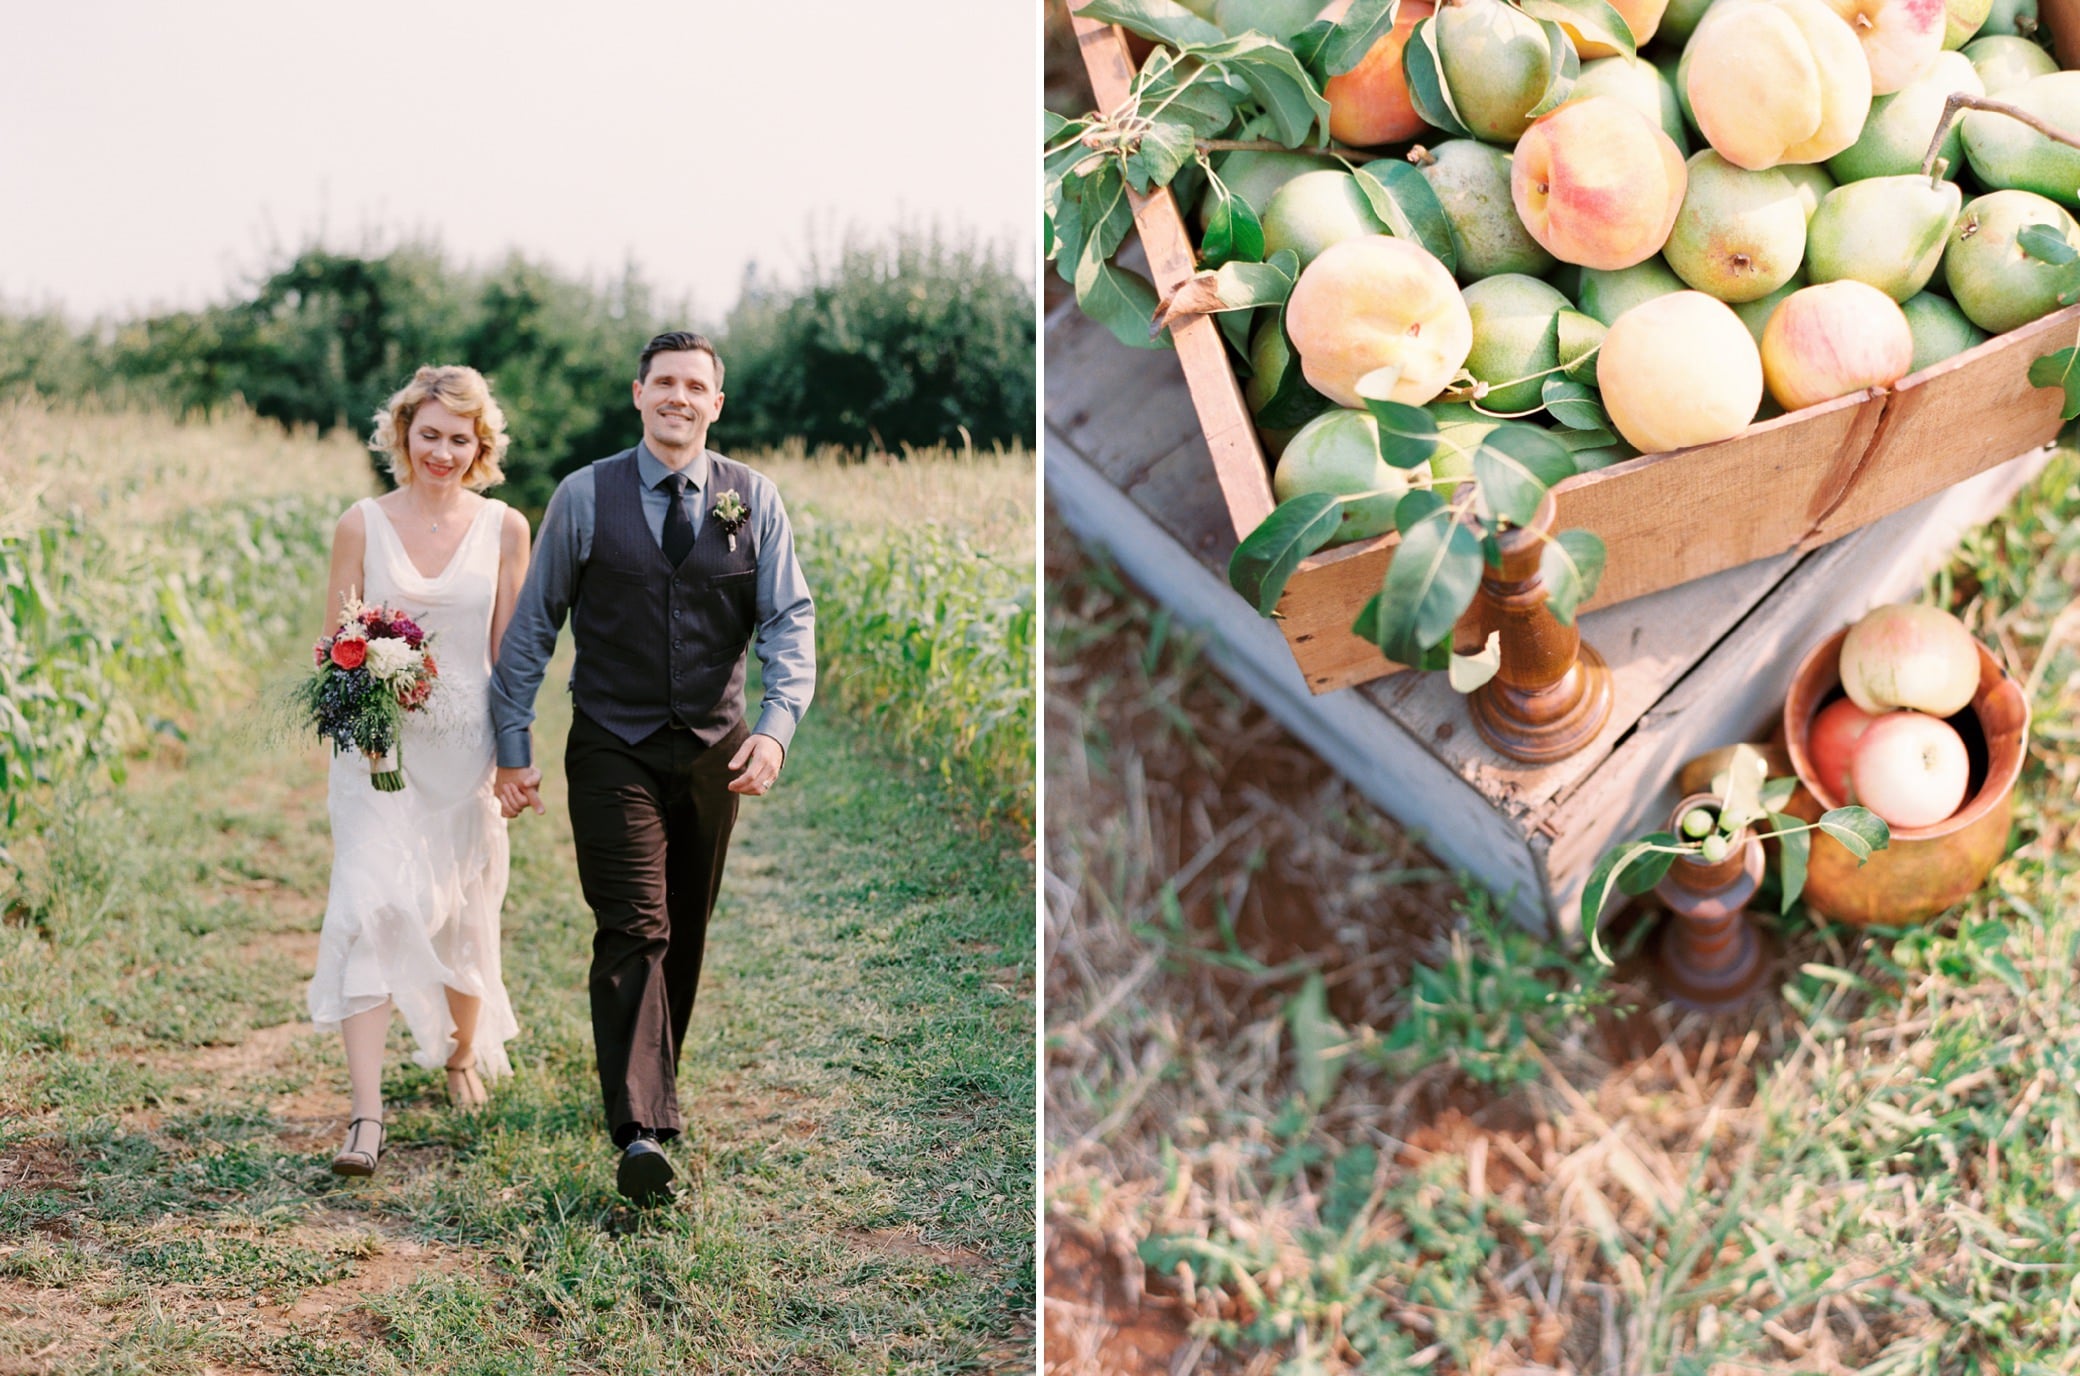 Mt. Hood, orchard wedding, Oregon wedding photography, peaches, pears, Simply Splendid